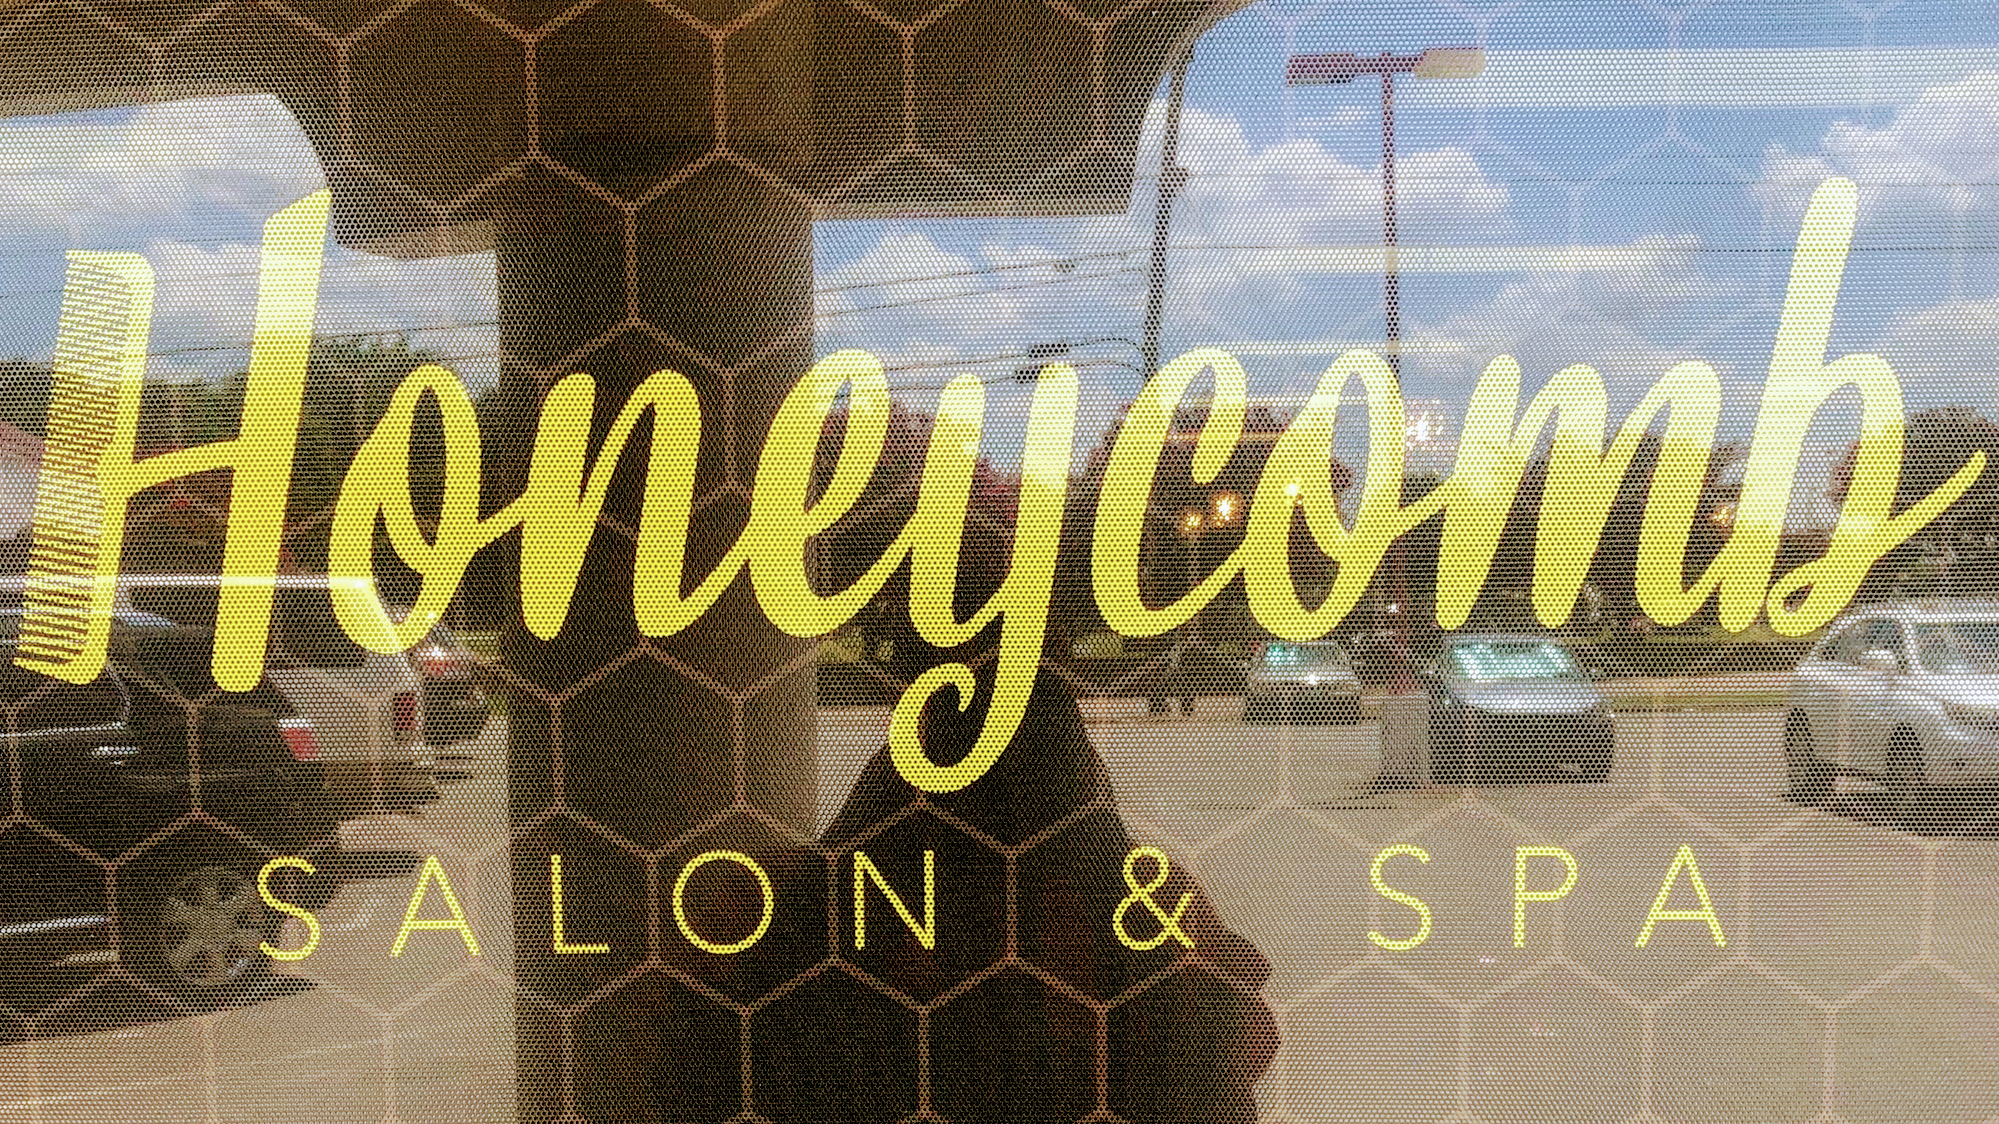 Honeycomb Salon and Spa LLC